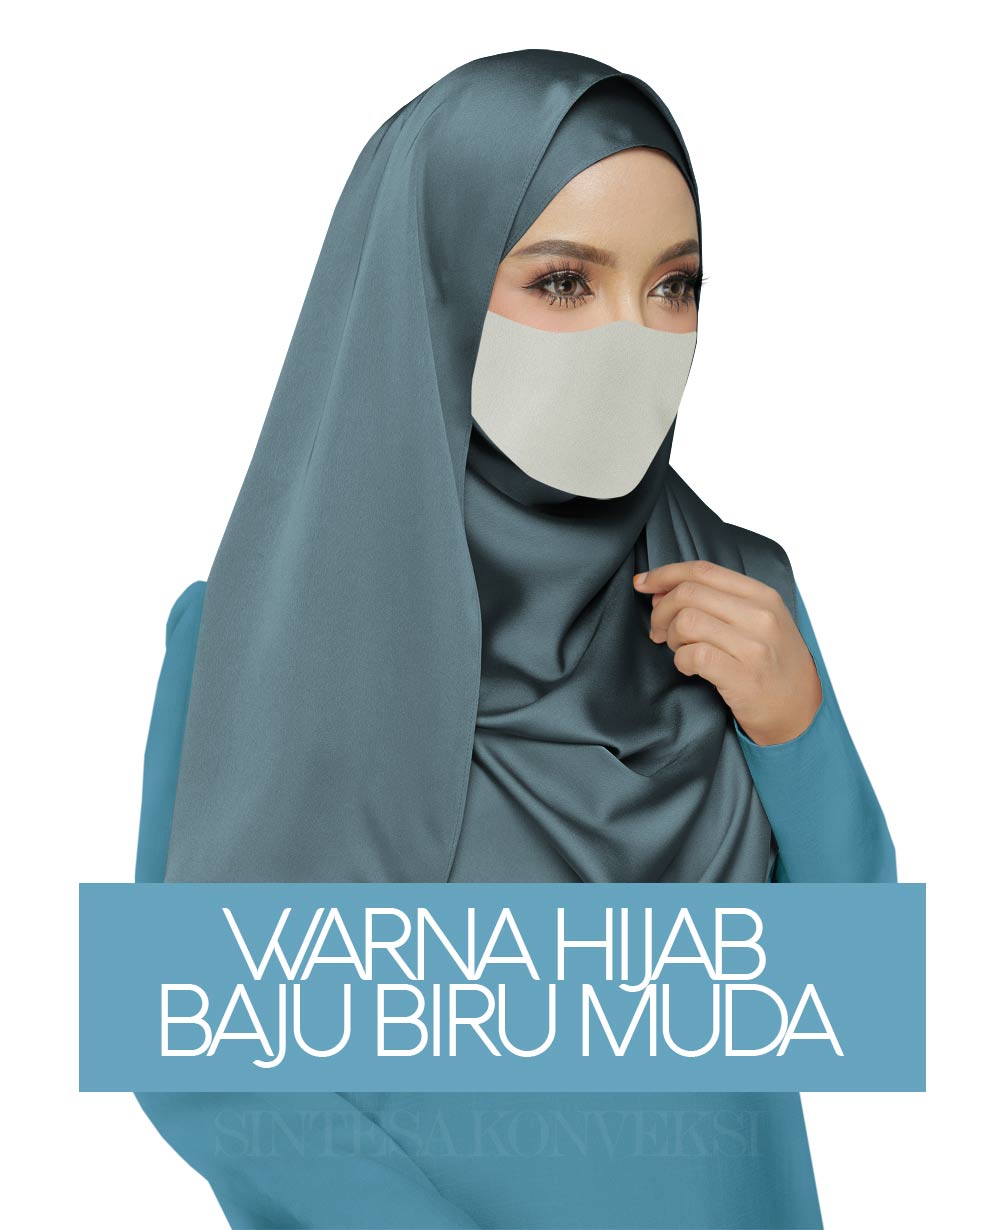 Baju Biru Muda Cocok dengan Jilbab Warna Apa